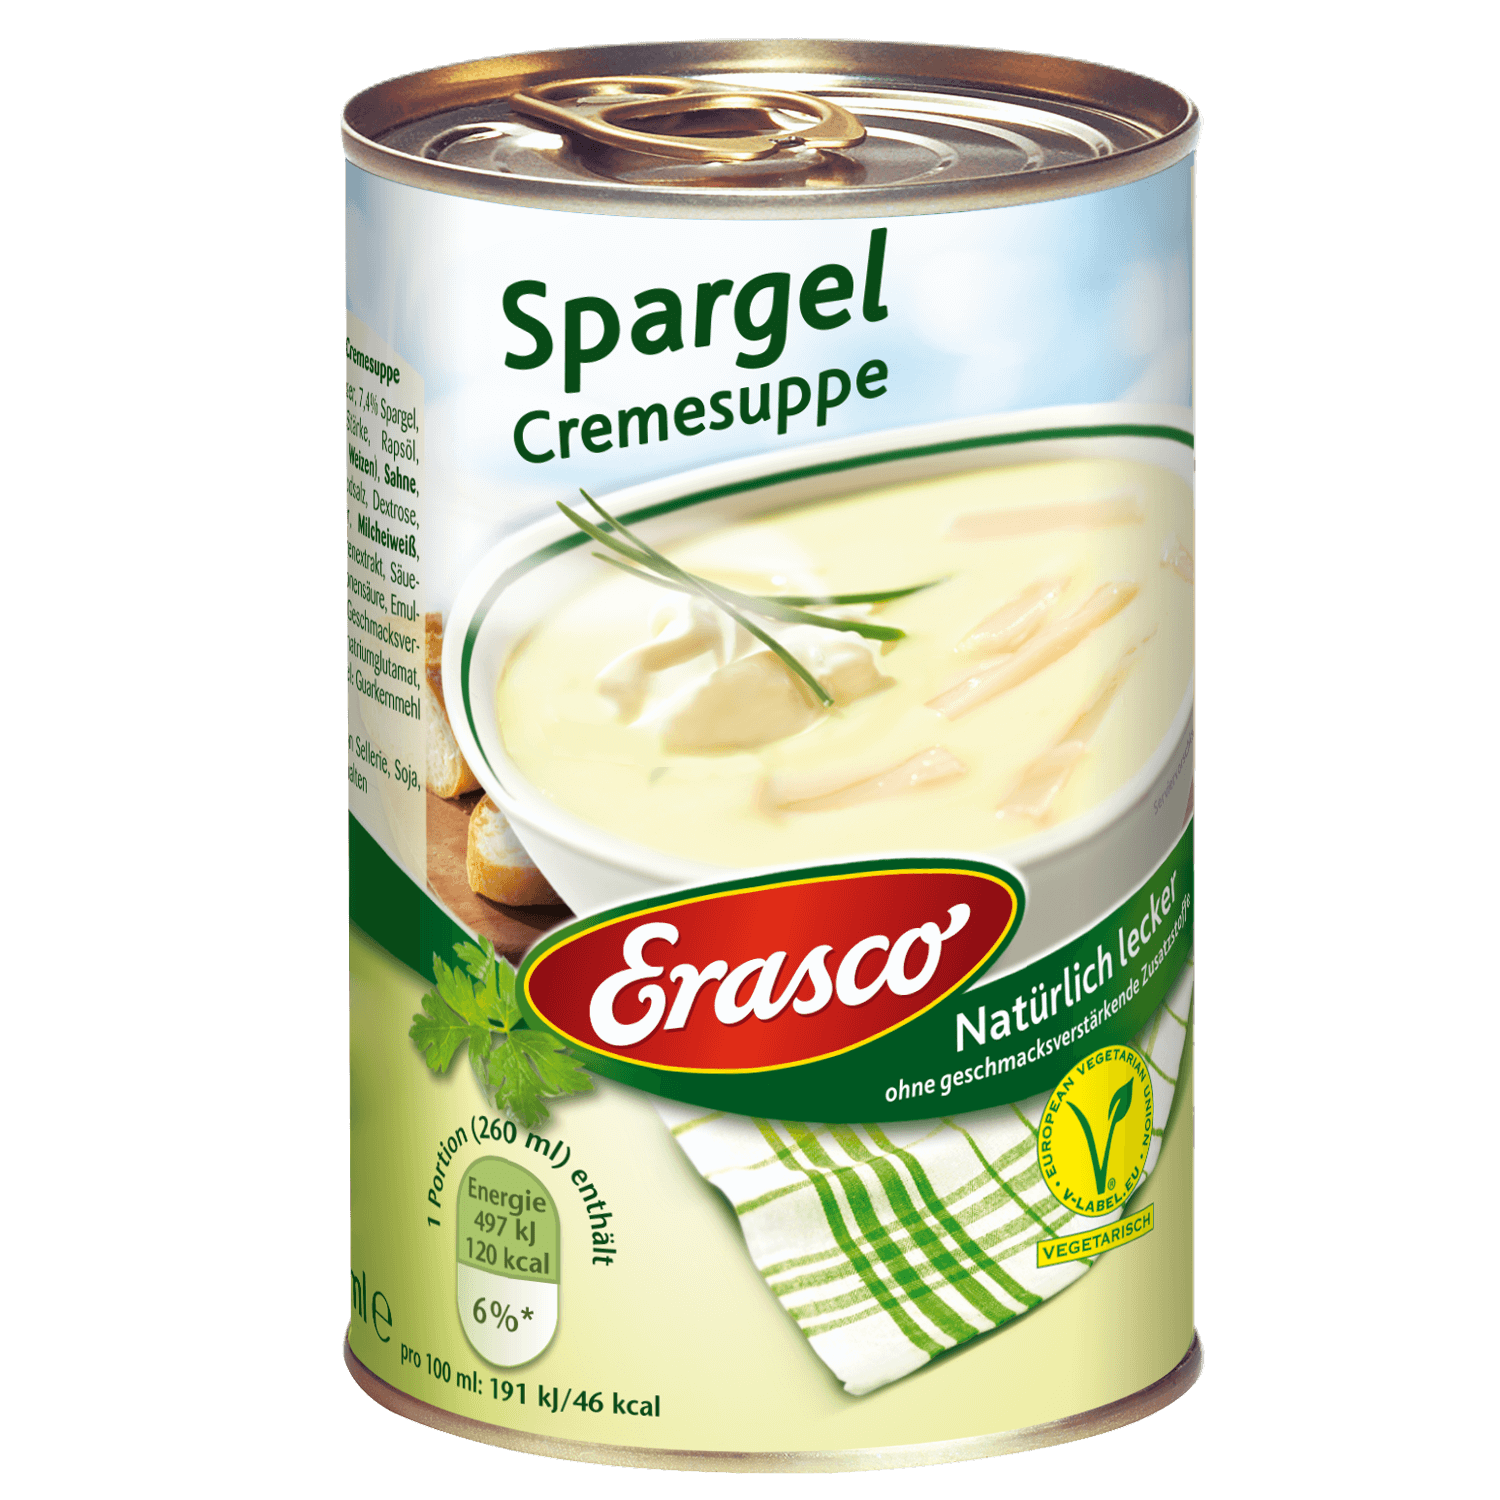 Erasco – Cream of Asparagus Soup – 400 ml can / Spargelcremesuppe | German Deli Ph